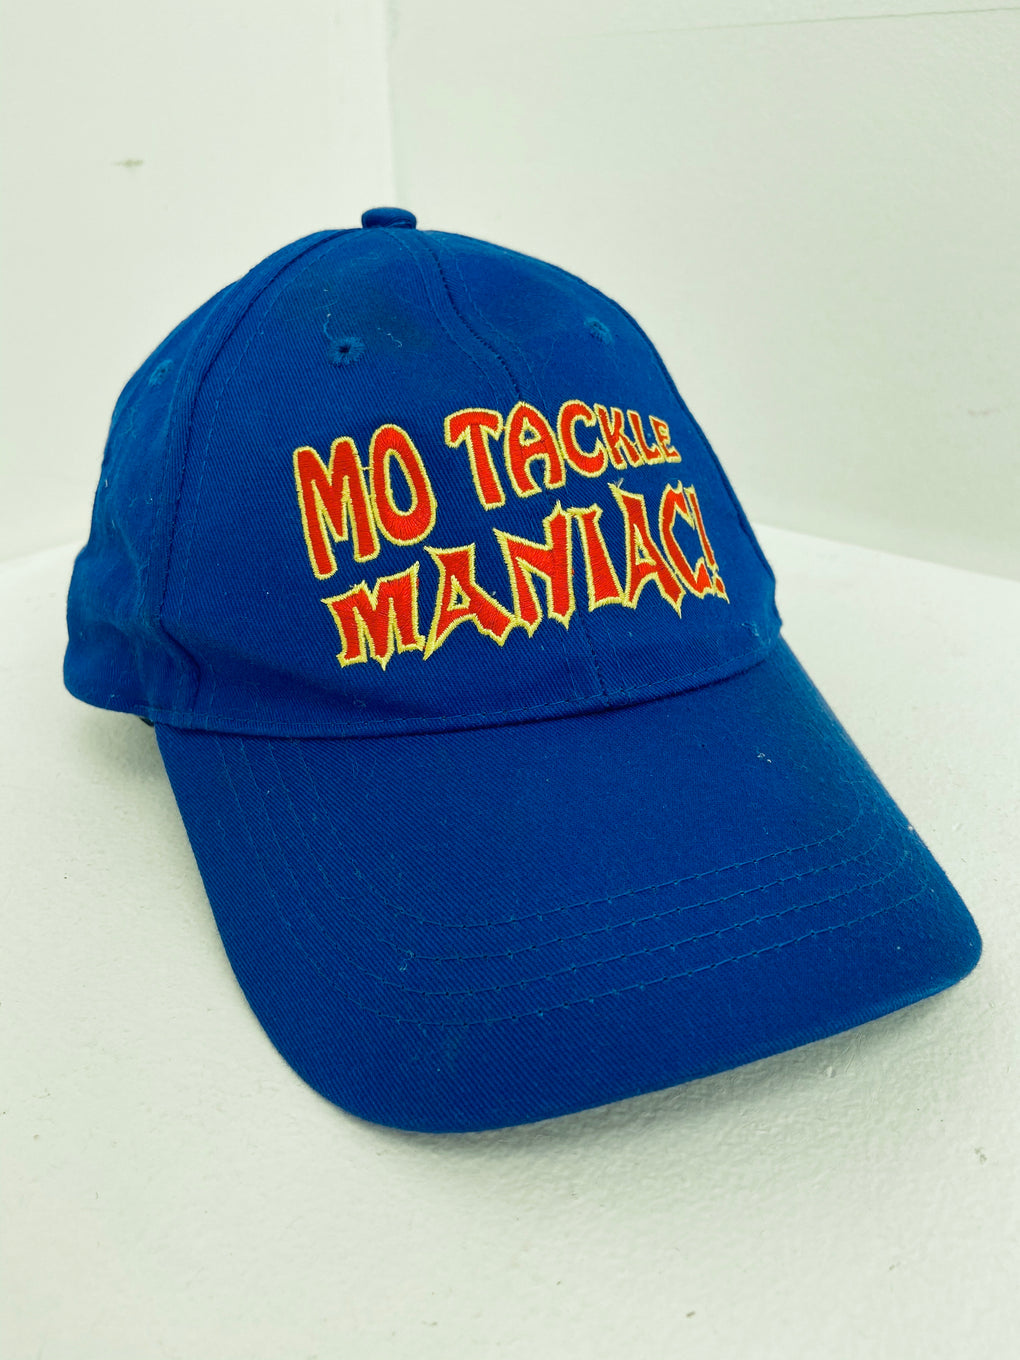 Tackle Maniac Cap